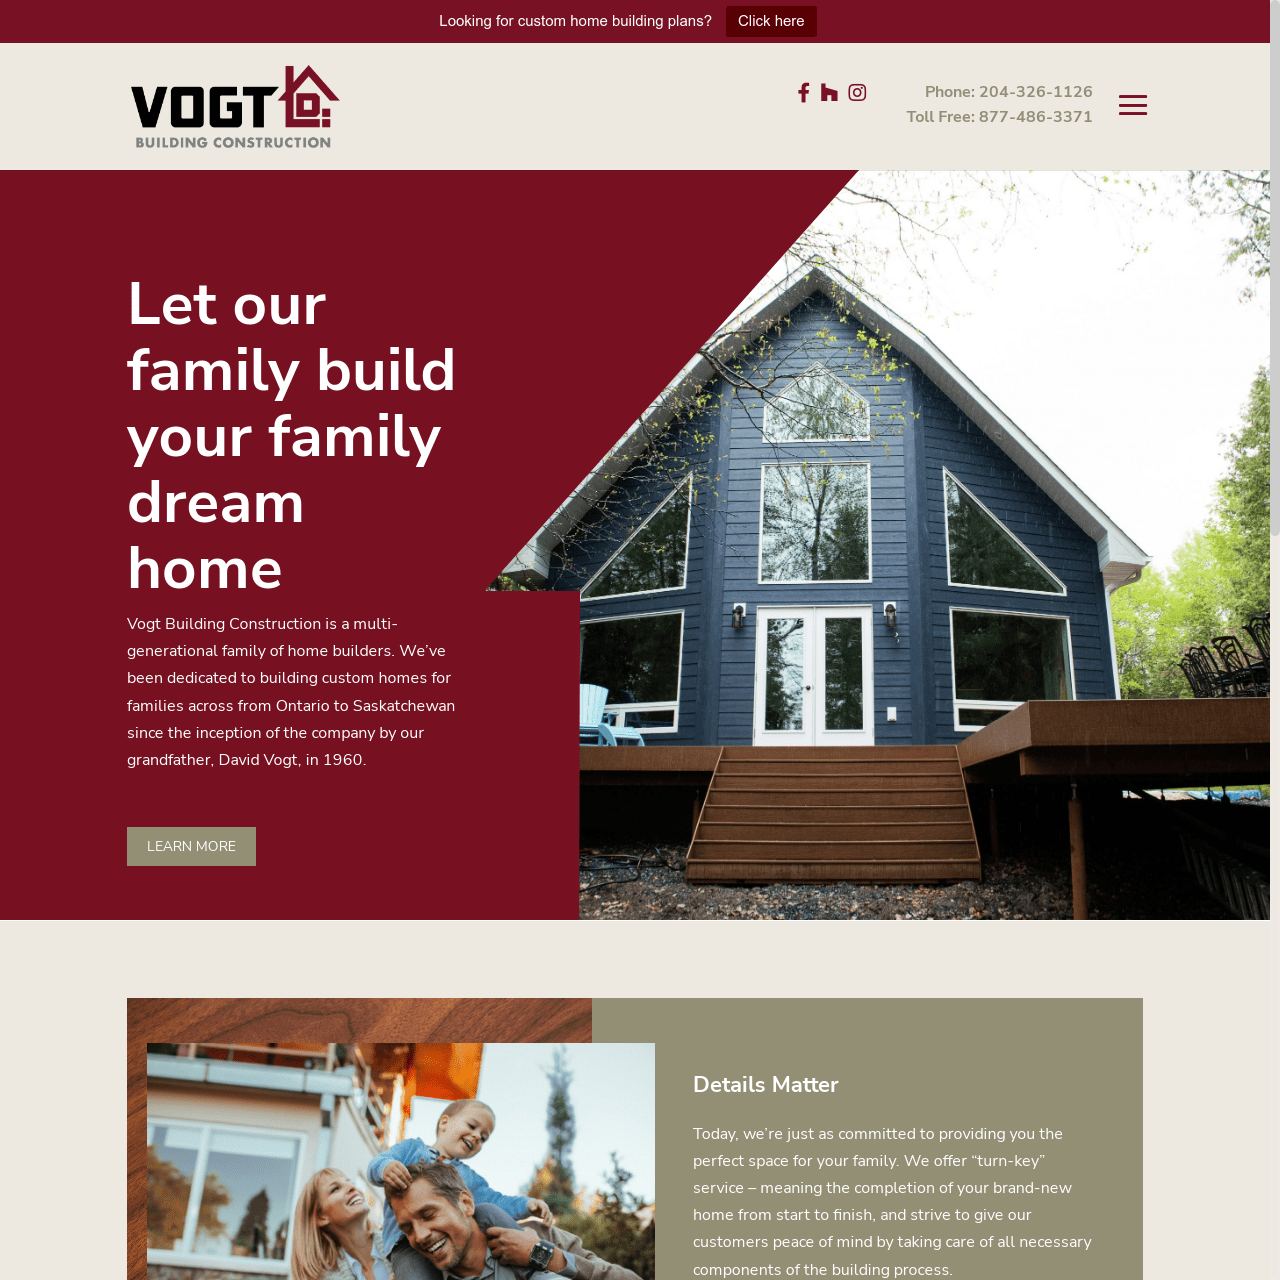 VOGT Building Construction website designed by 6P Marketing